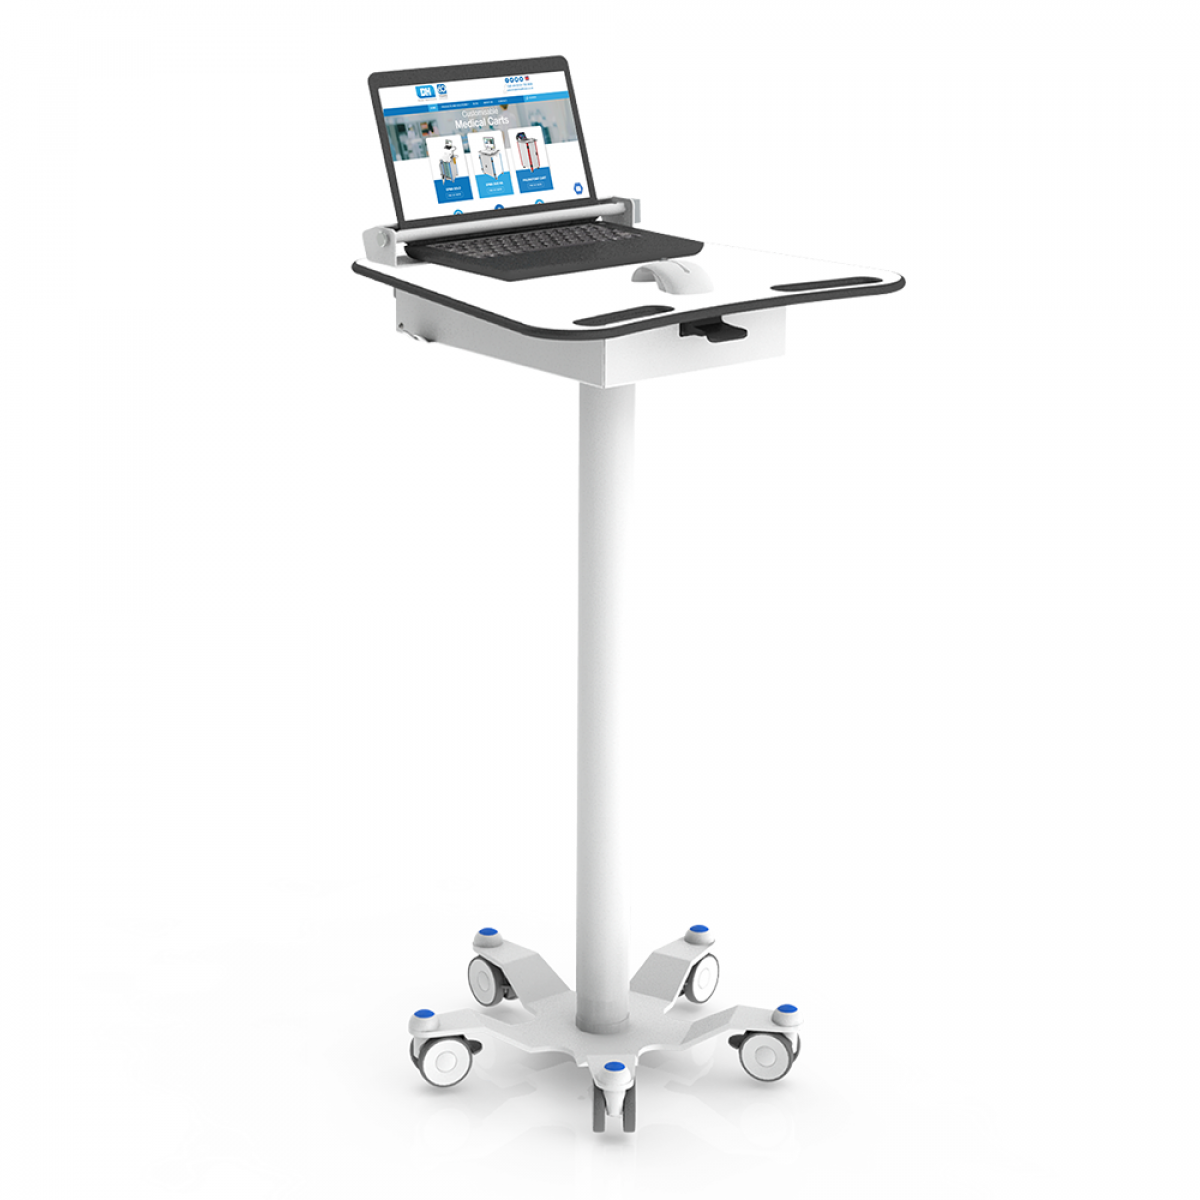 Dalen Healthcare's ergonomic workstation - Laptop-on-Wheels